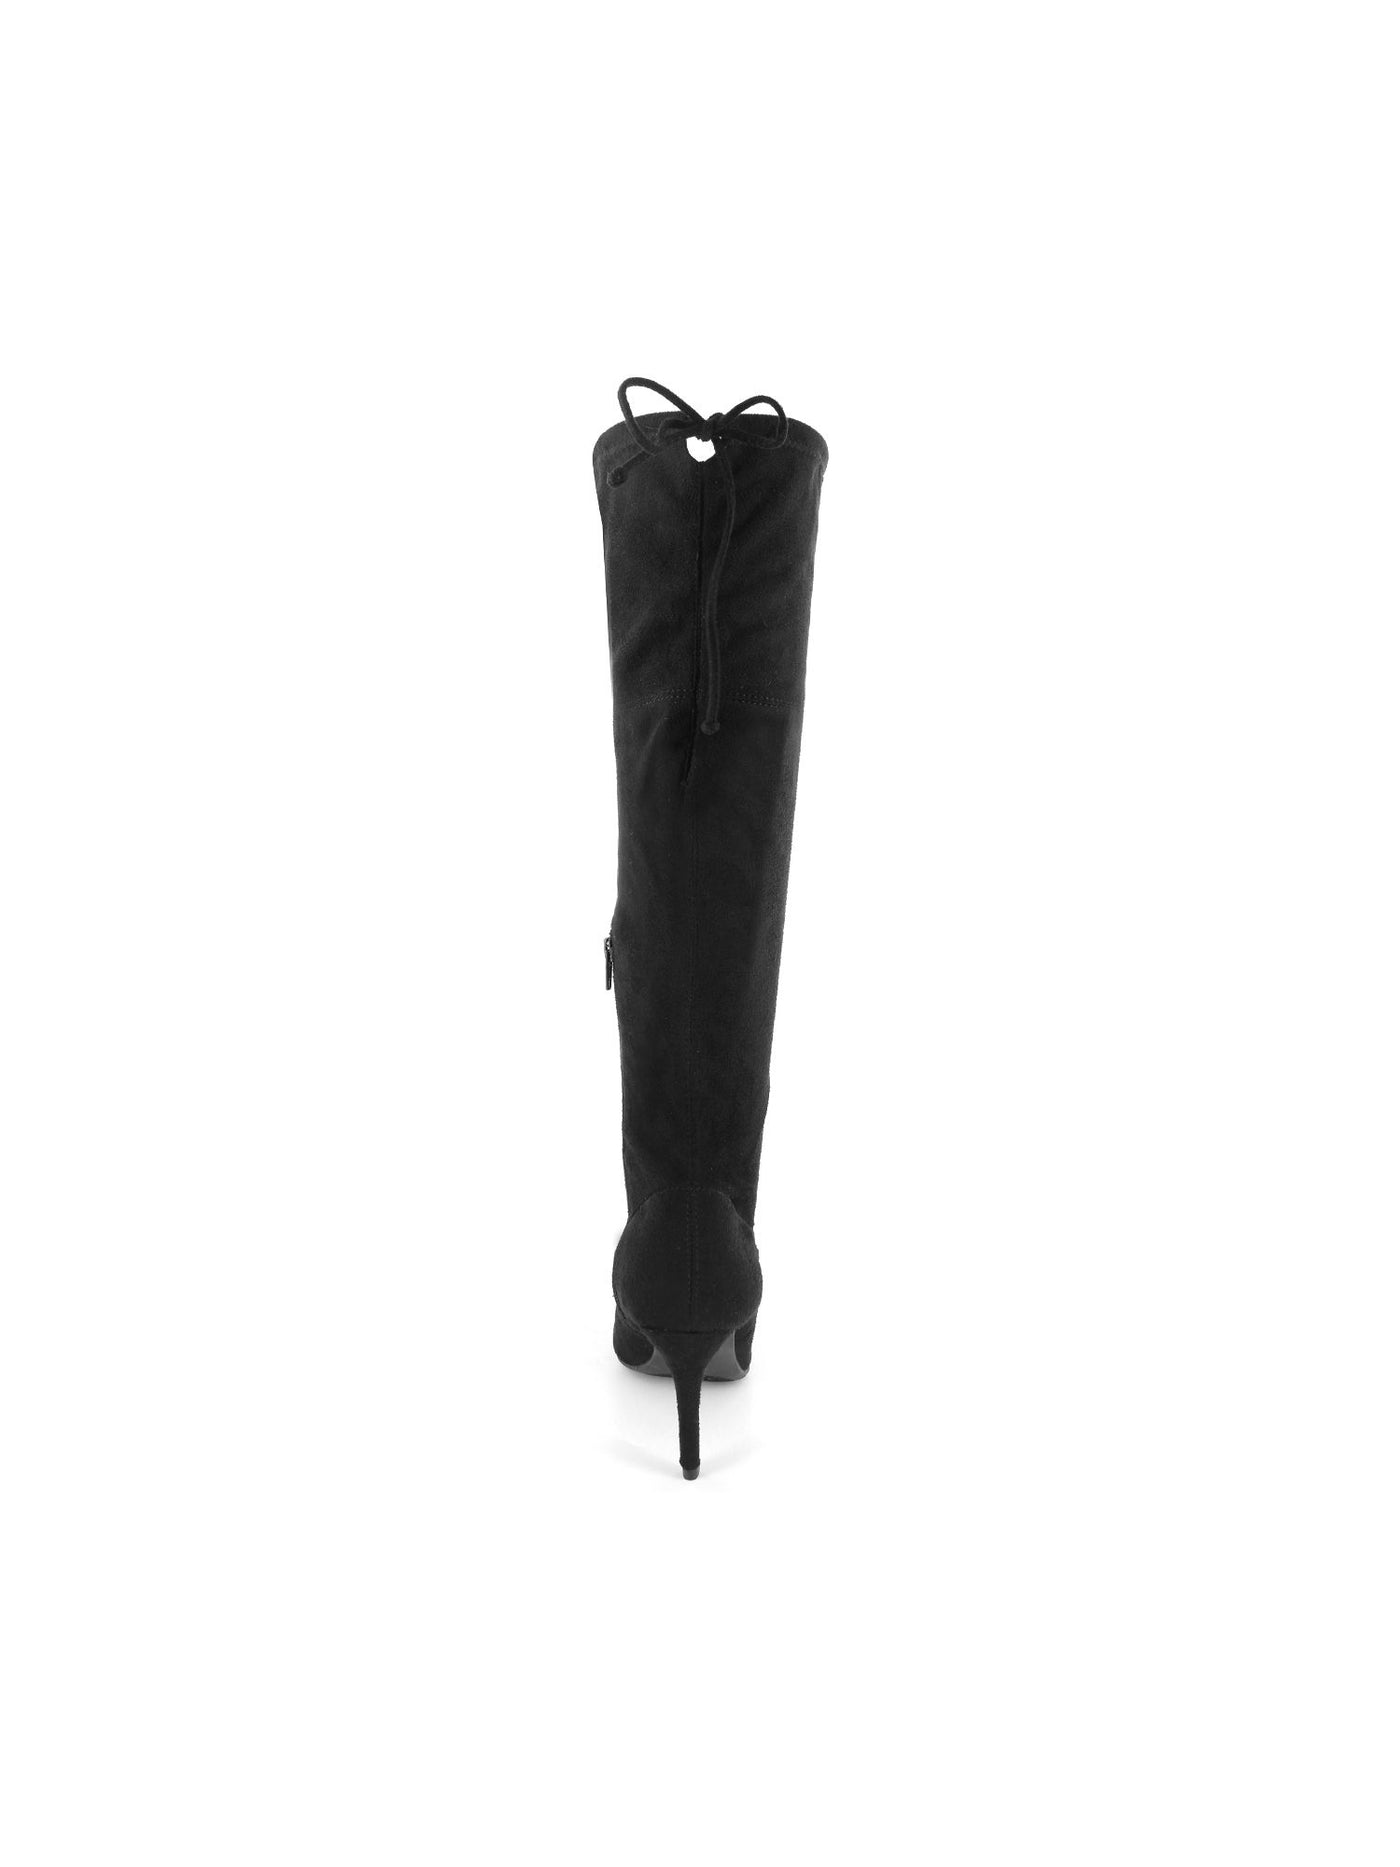 ZIGI SOHO Womens Black Tie Back Padded Silla Pointed Toe Stiletto Zip-Up Dress Boots 8 M